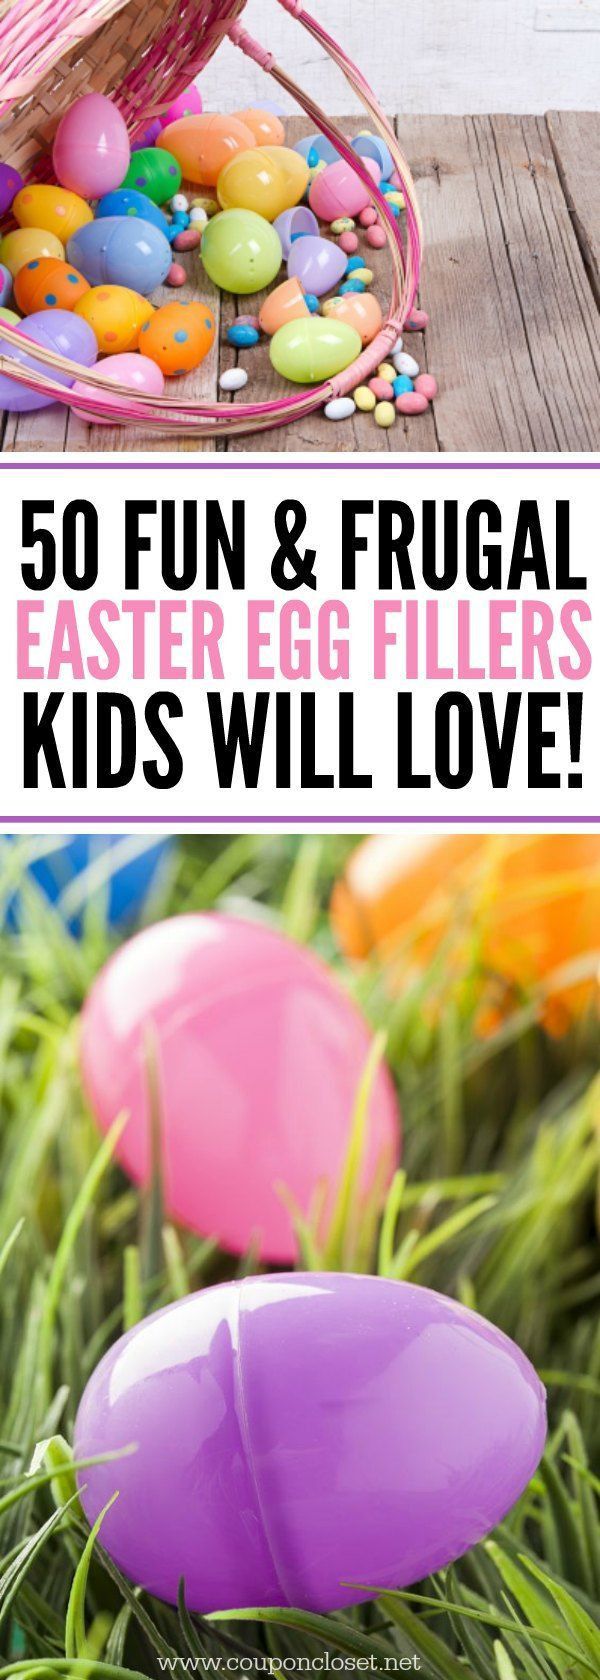 Ideas For Easter Egg Fillers
 The Best Plastic Easter Egg fillers that kids will love